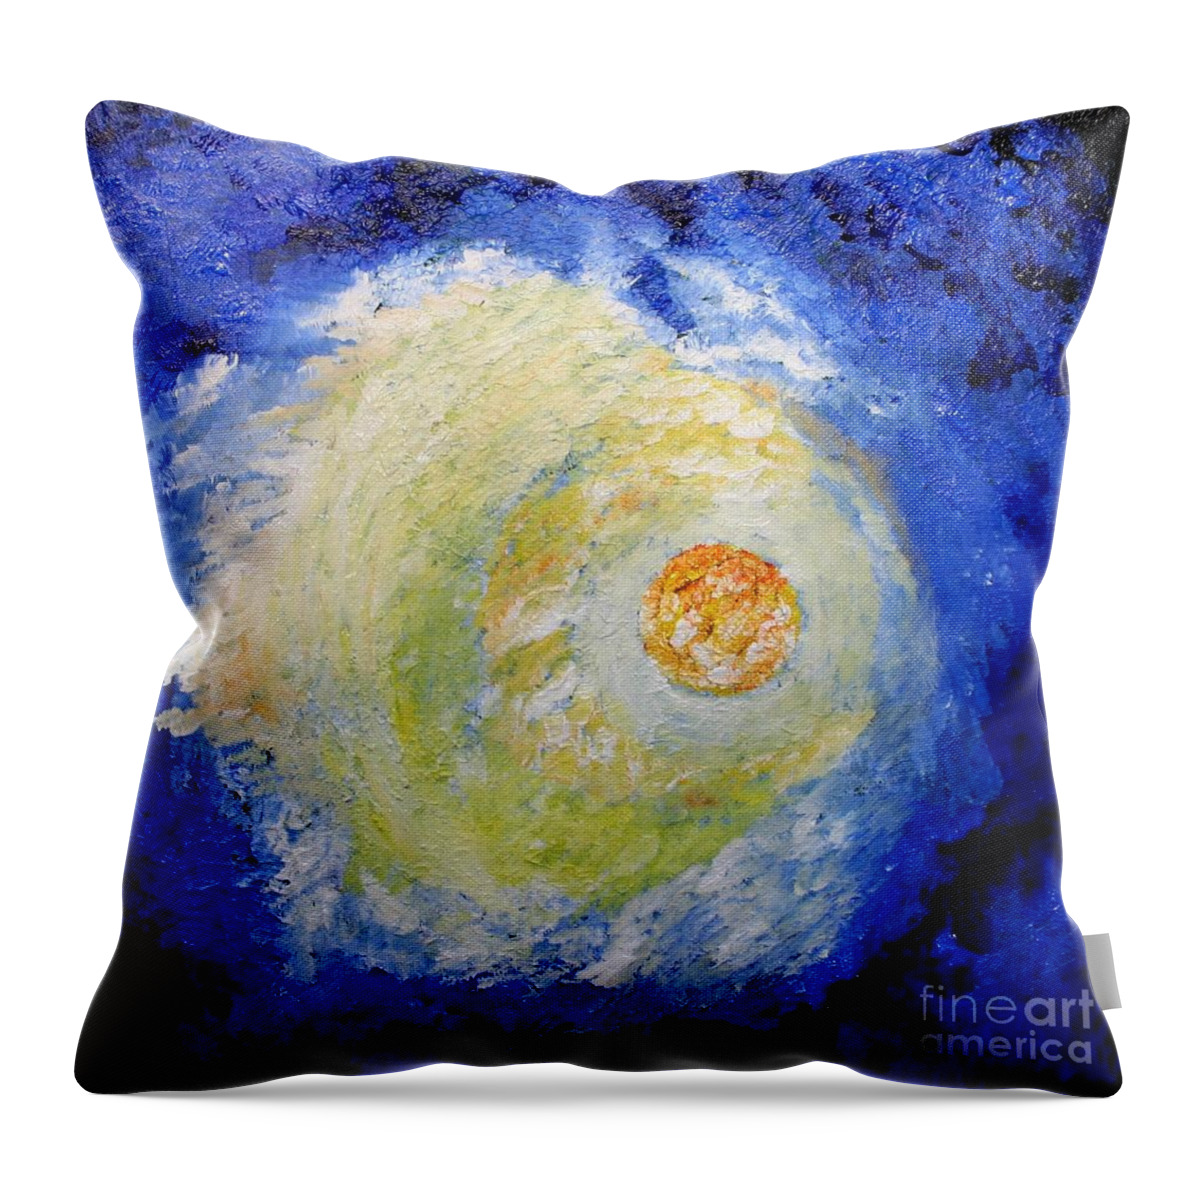 Moon Throw Pillow featuring the painting Full moon by Susanne Baumann